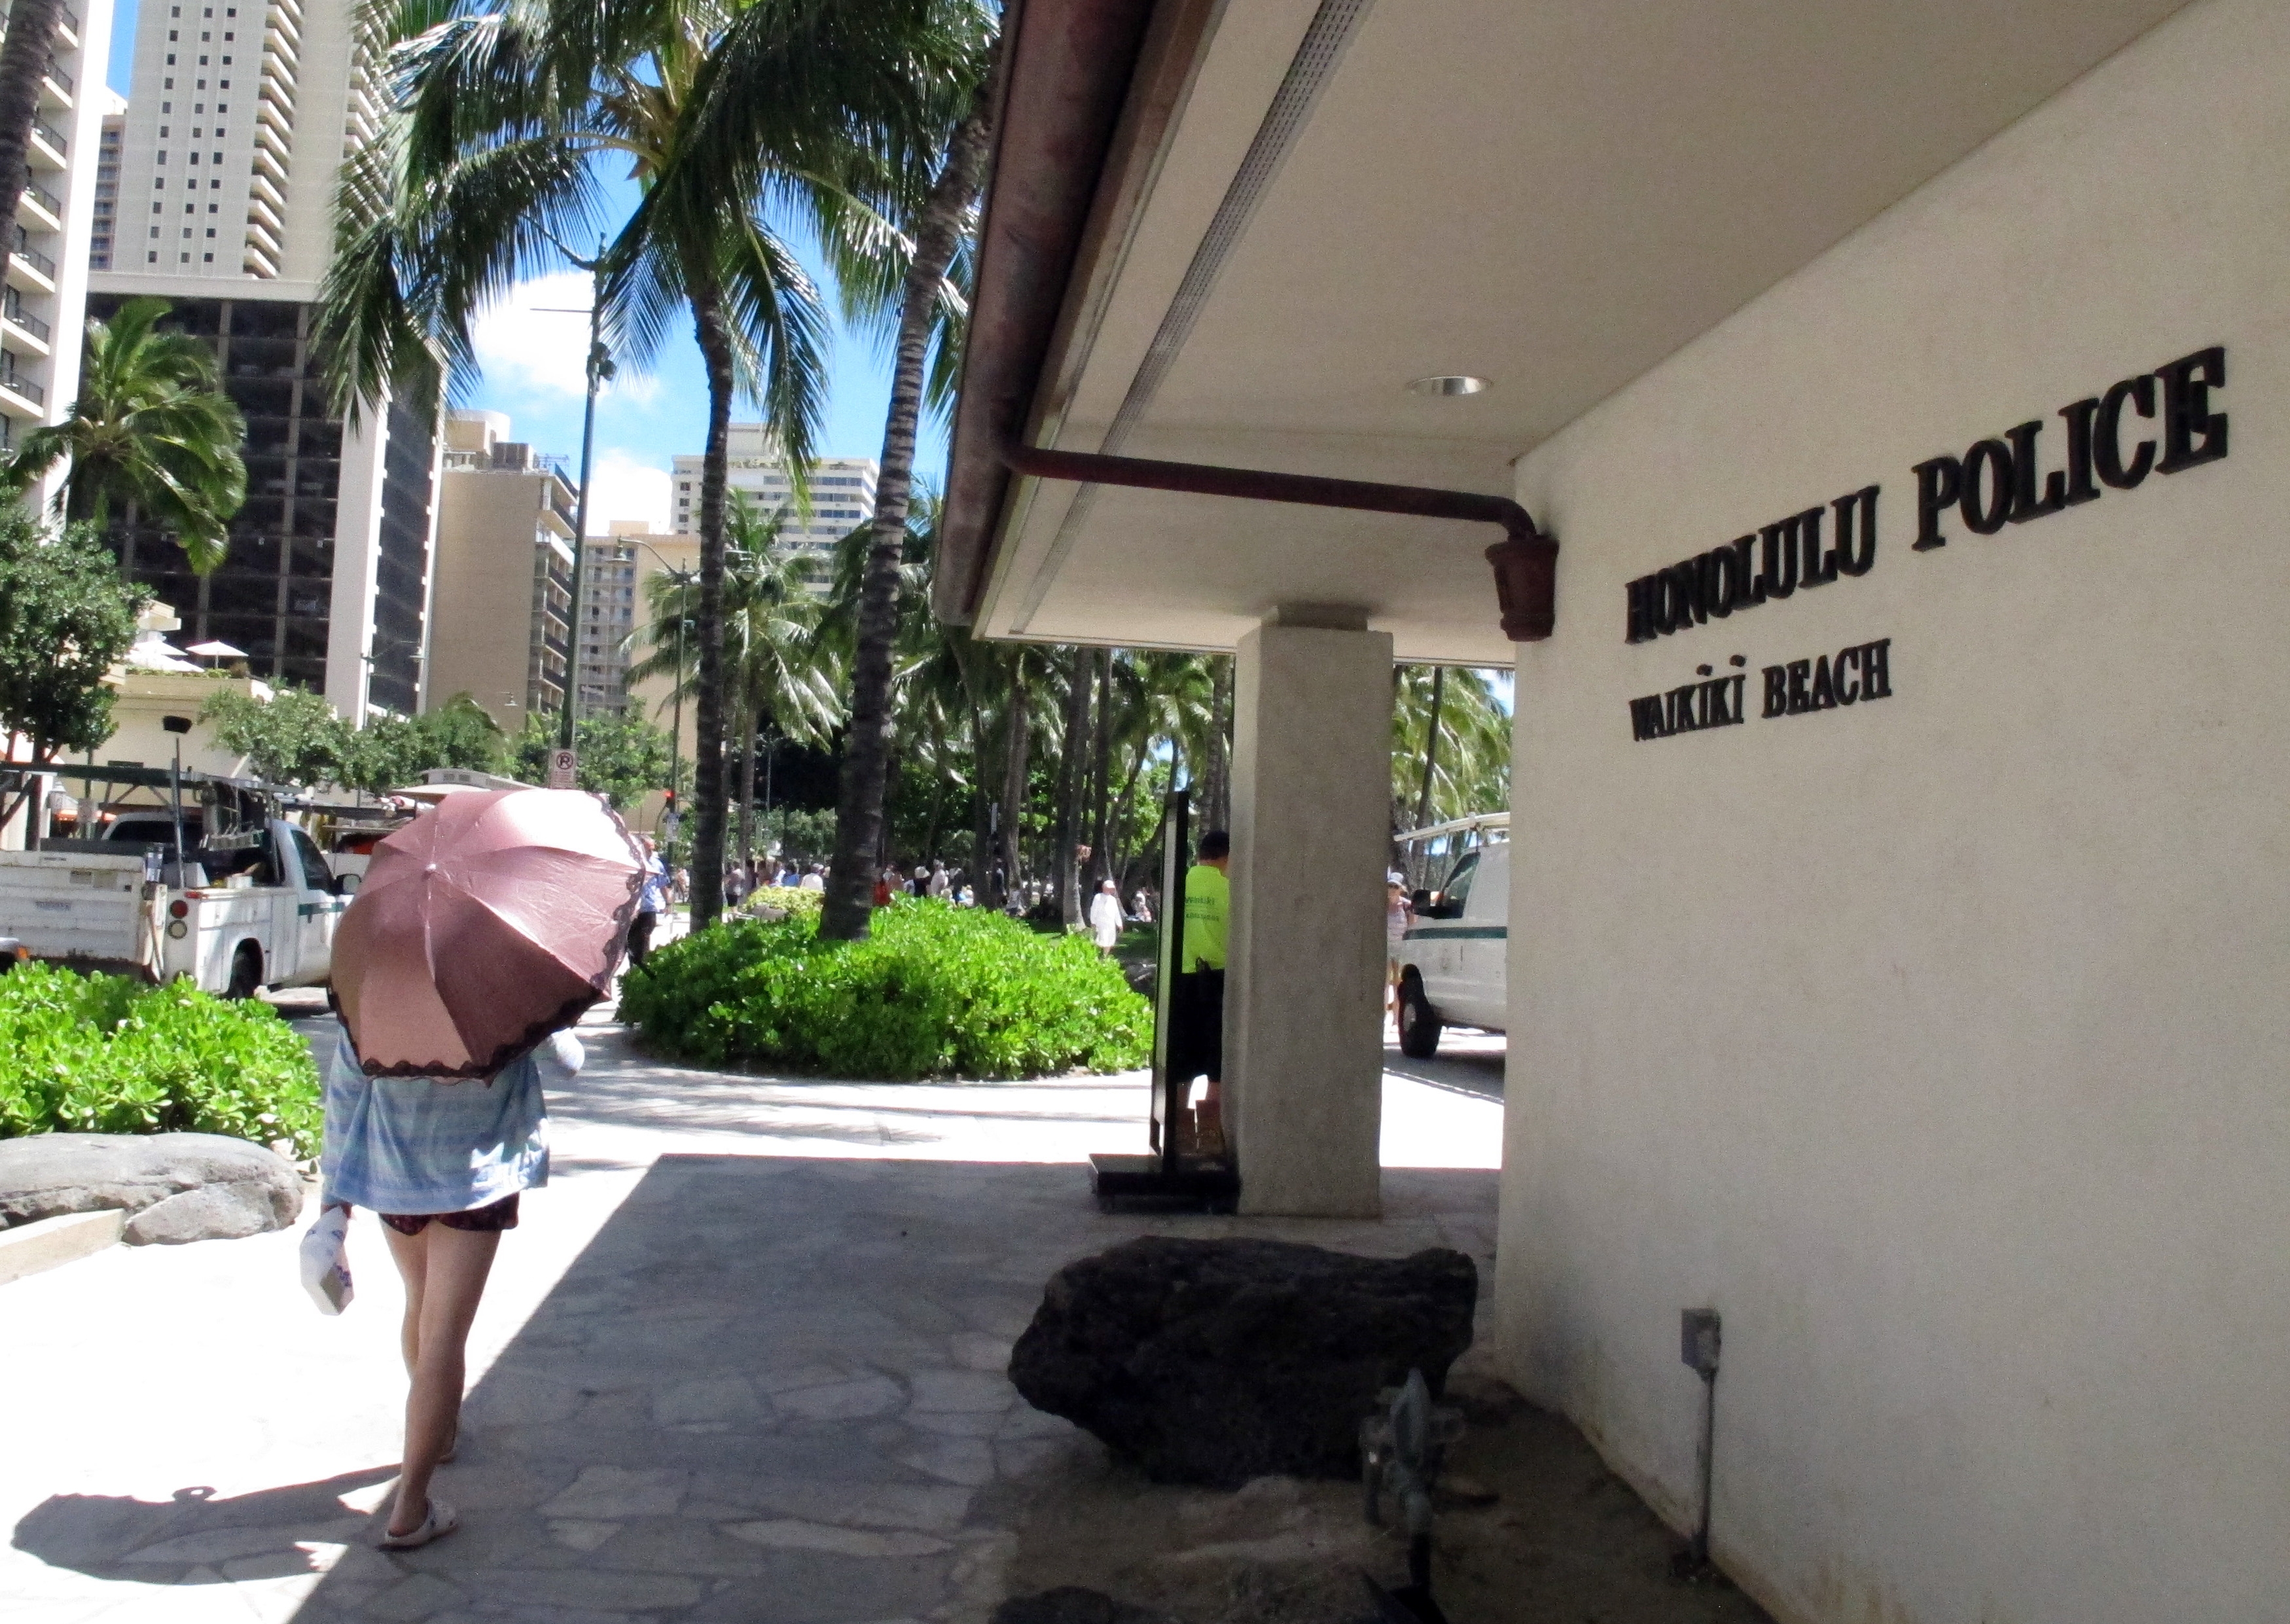 A pedestrian walks in front of a Honolulu Police Department station in Honolulu's tourist area of Waikiki on Wednesday, March 19, 2014 (Oskar Garcia—AP)